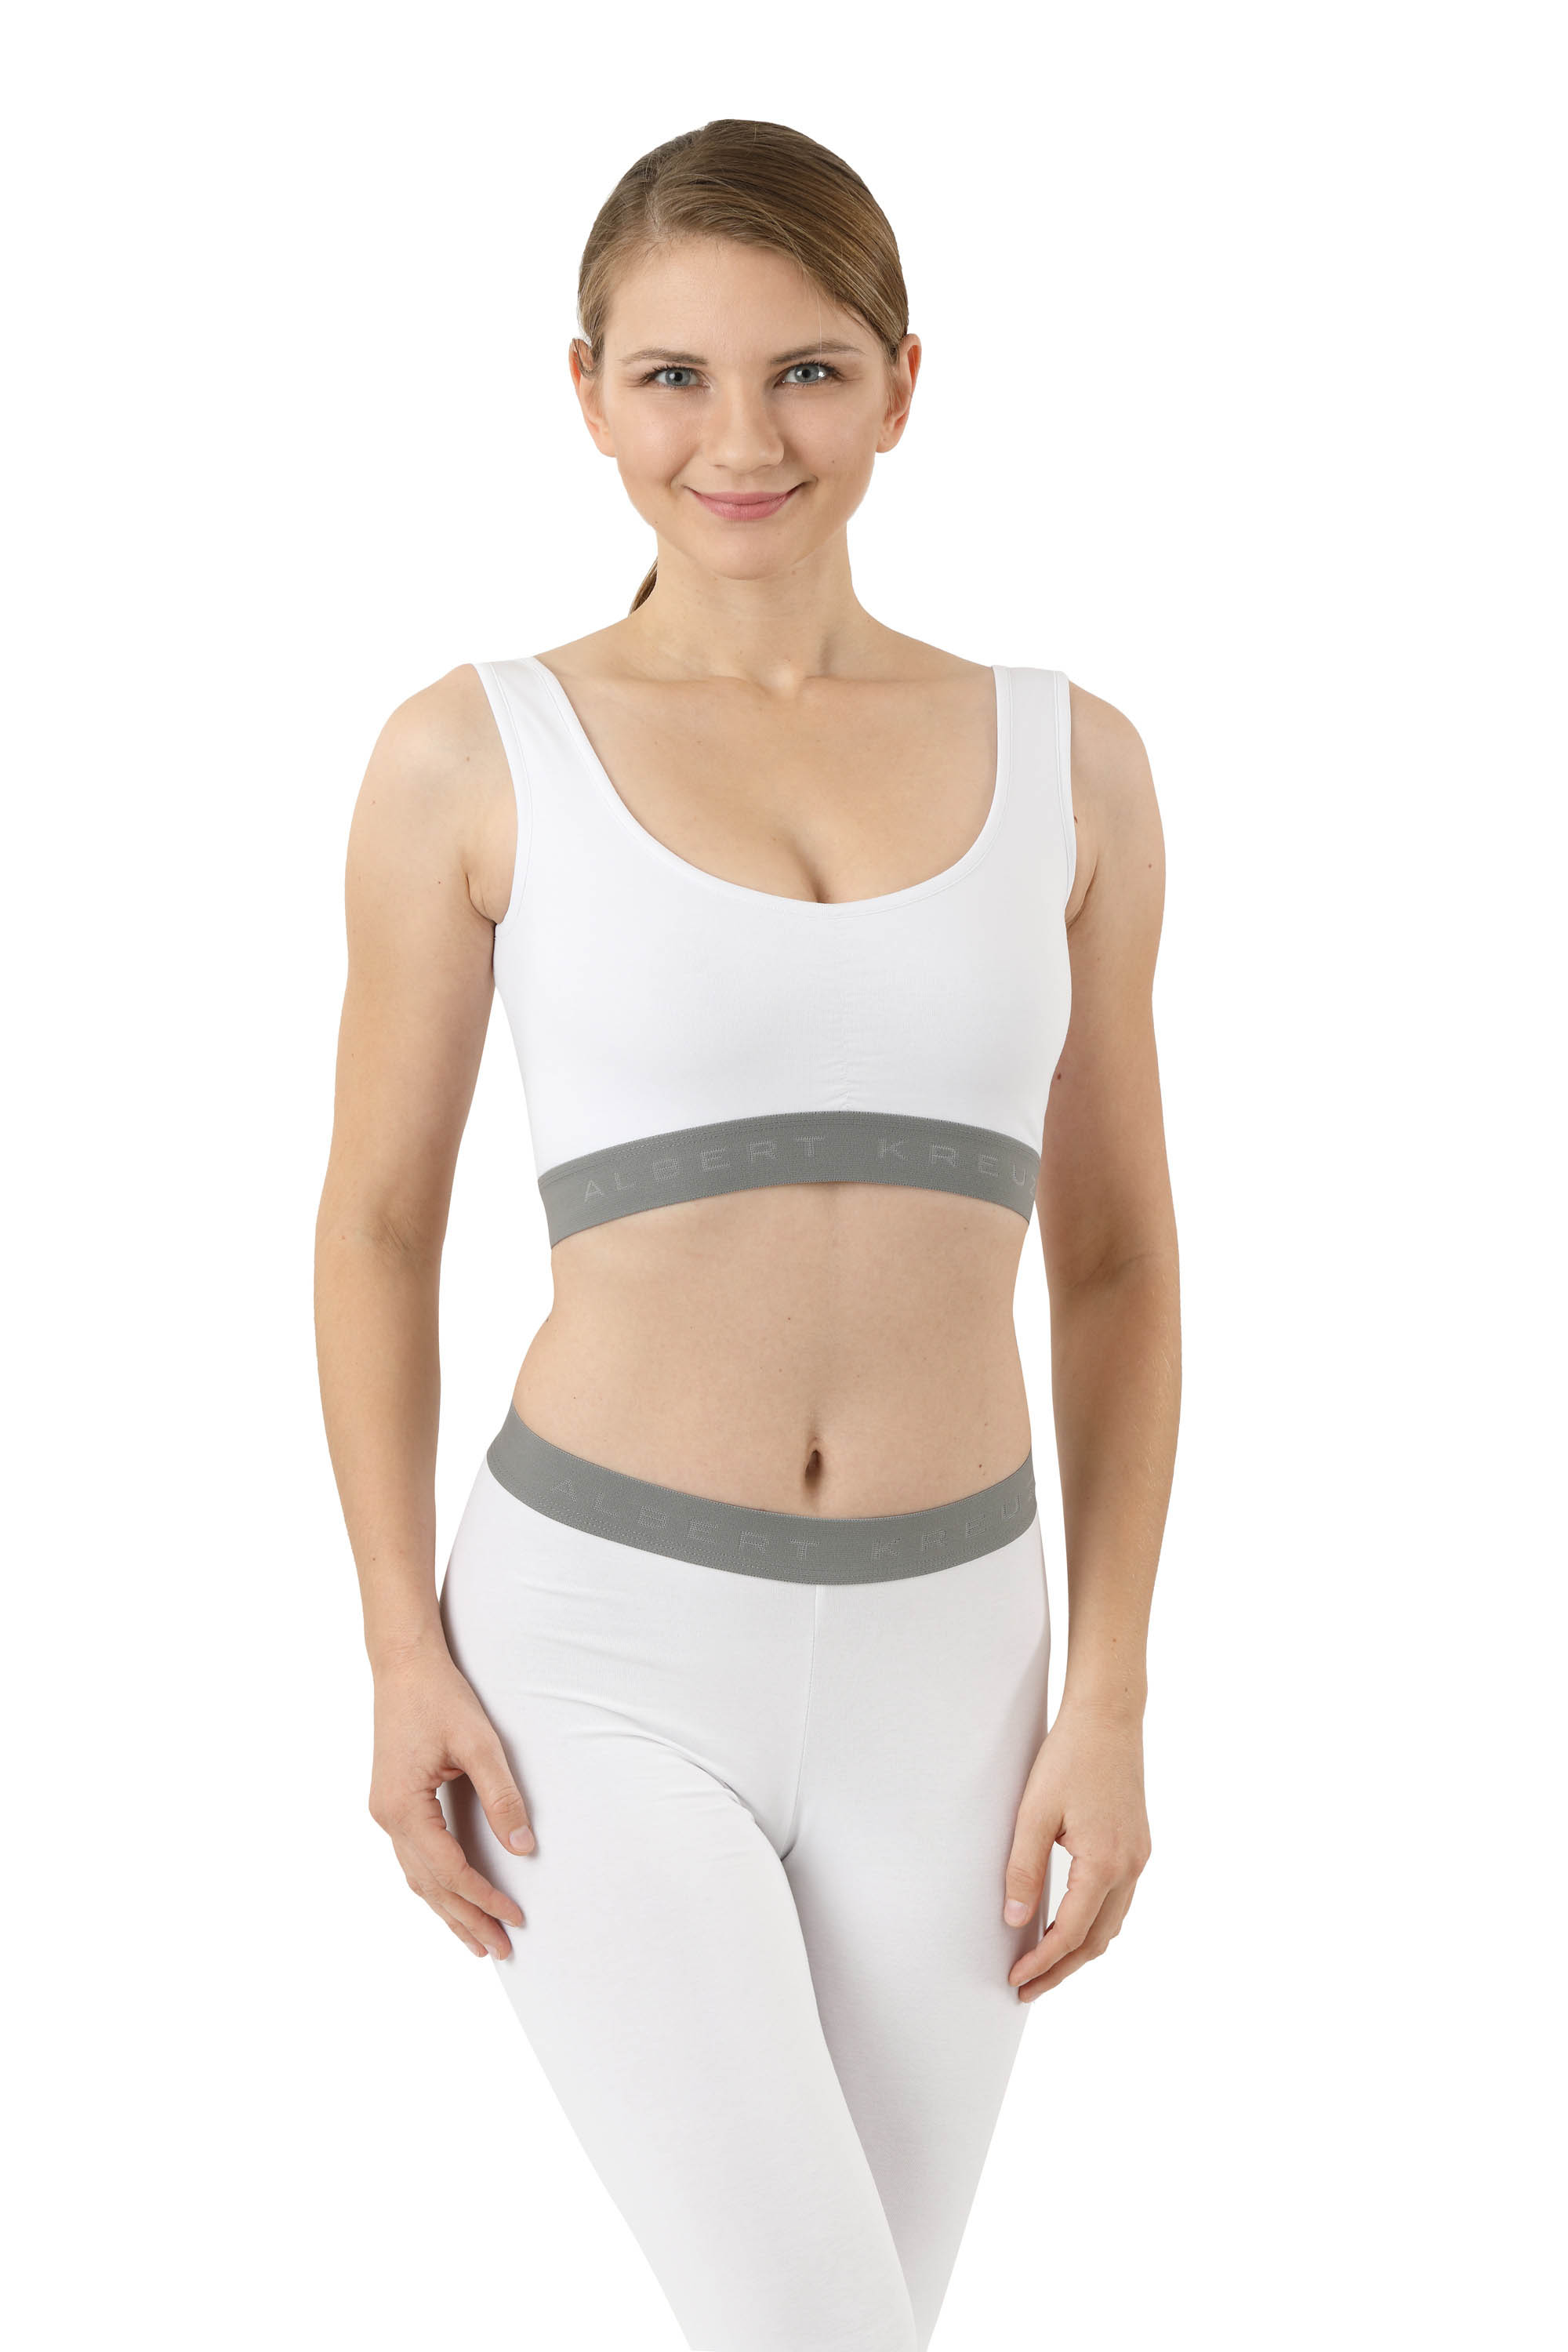 ALBERT KREUZ  Women's slip-on wireless comfort bra organic stretch cotton  white